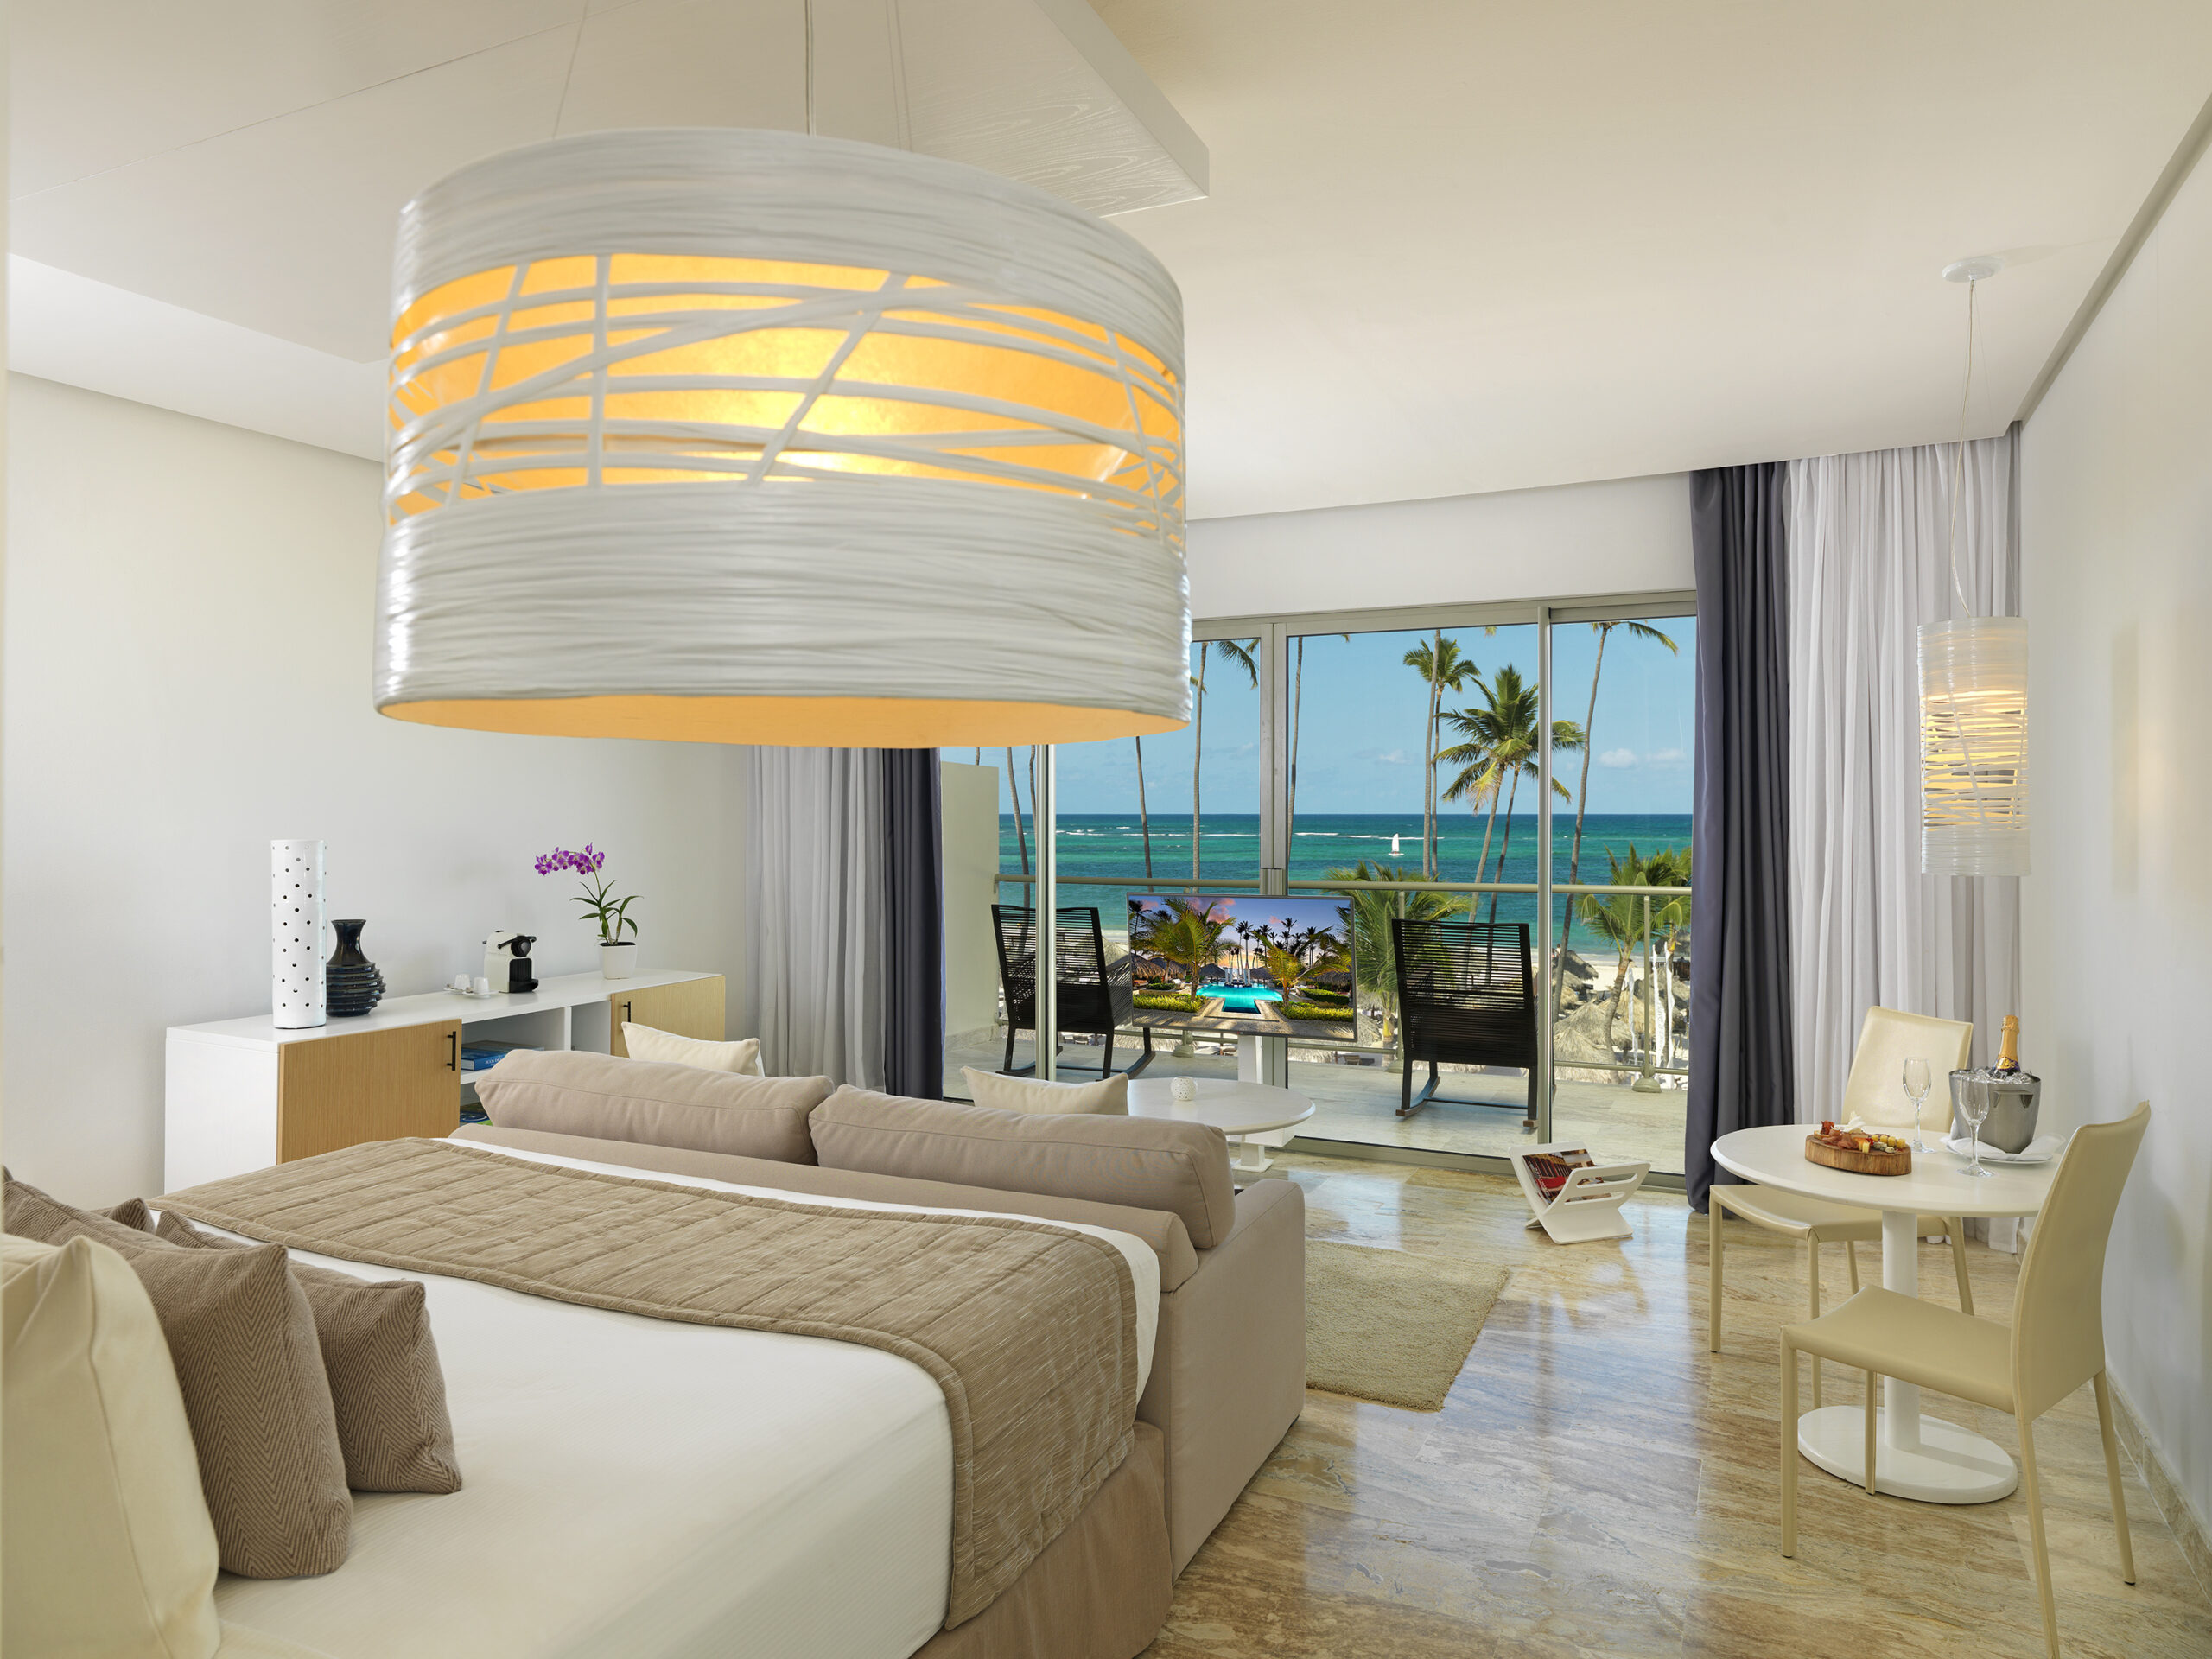 “Paradisus Palma Real Golf & Spa Resort”, propone desconectar para reconectar durante este verano